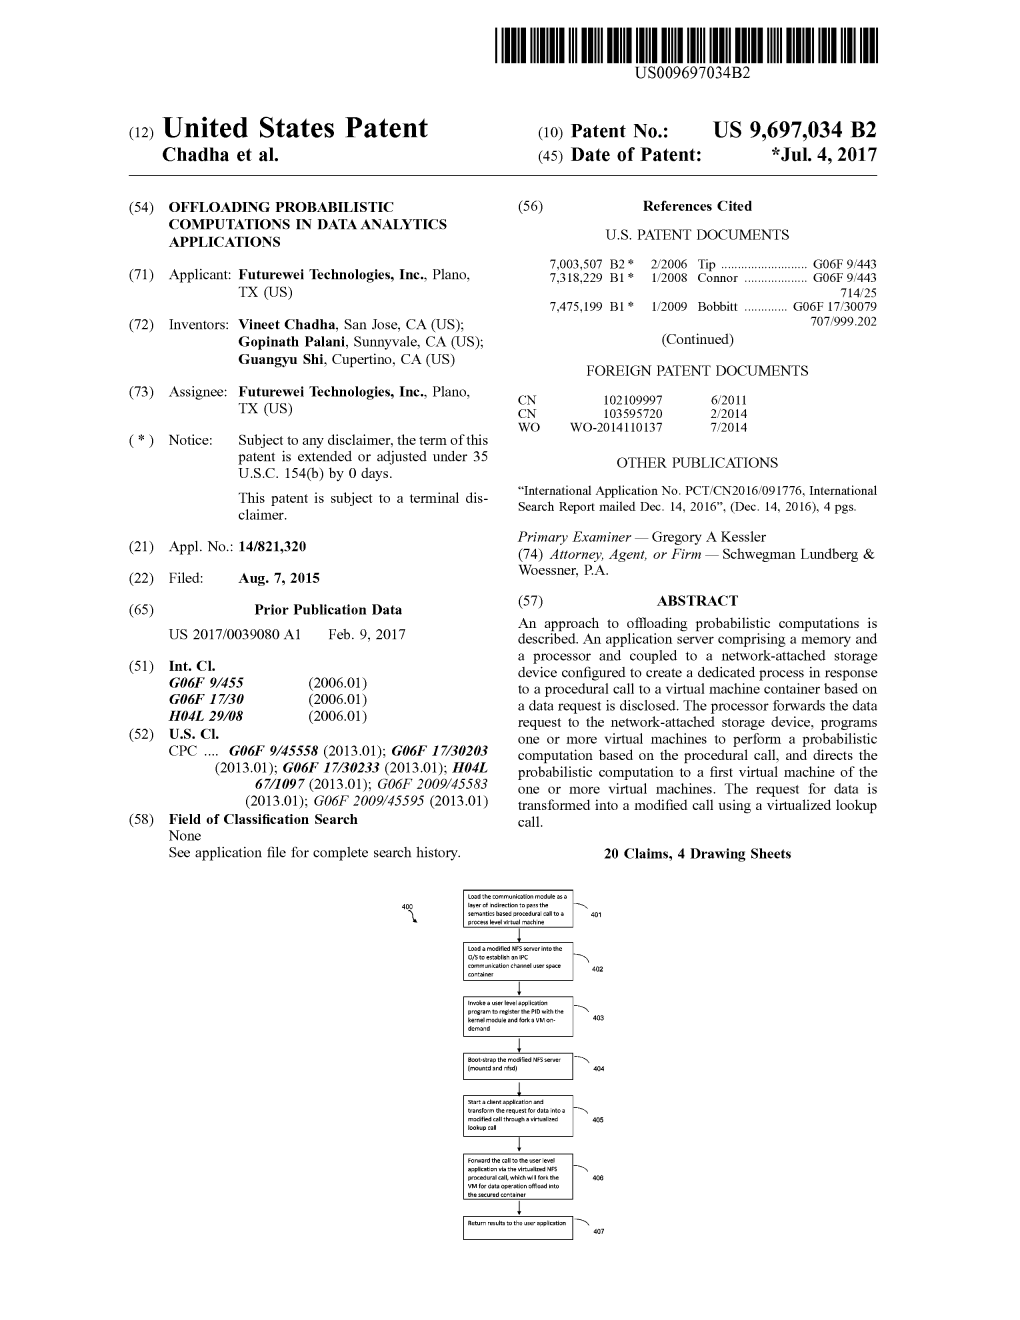 (12) United States Patent (10) Patent No.: US 9,697,034 B2 Chadha Et Al